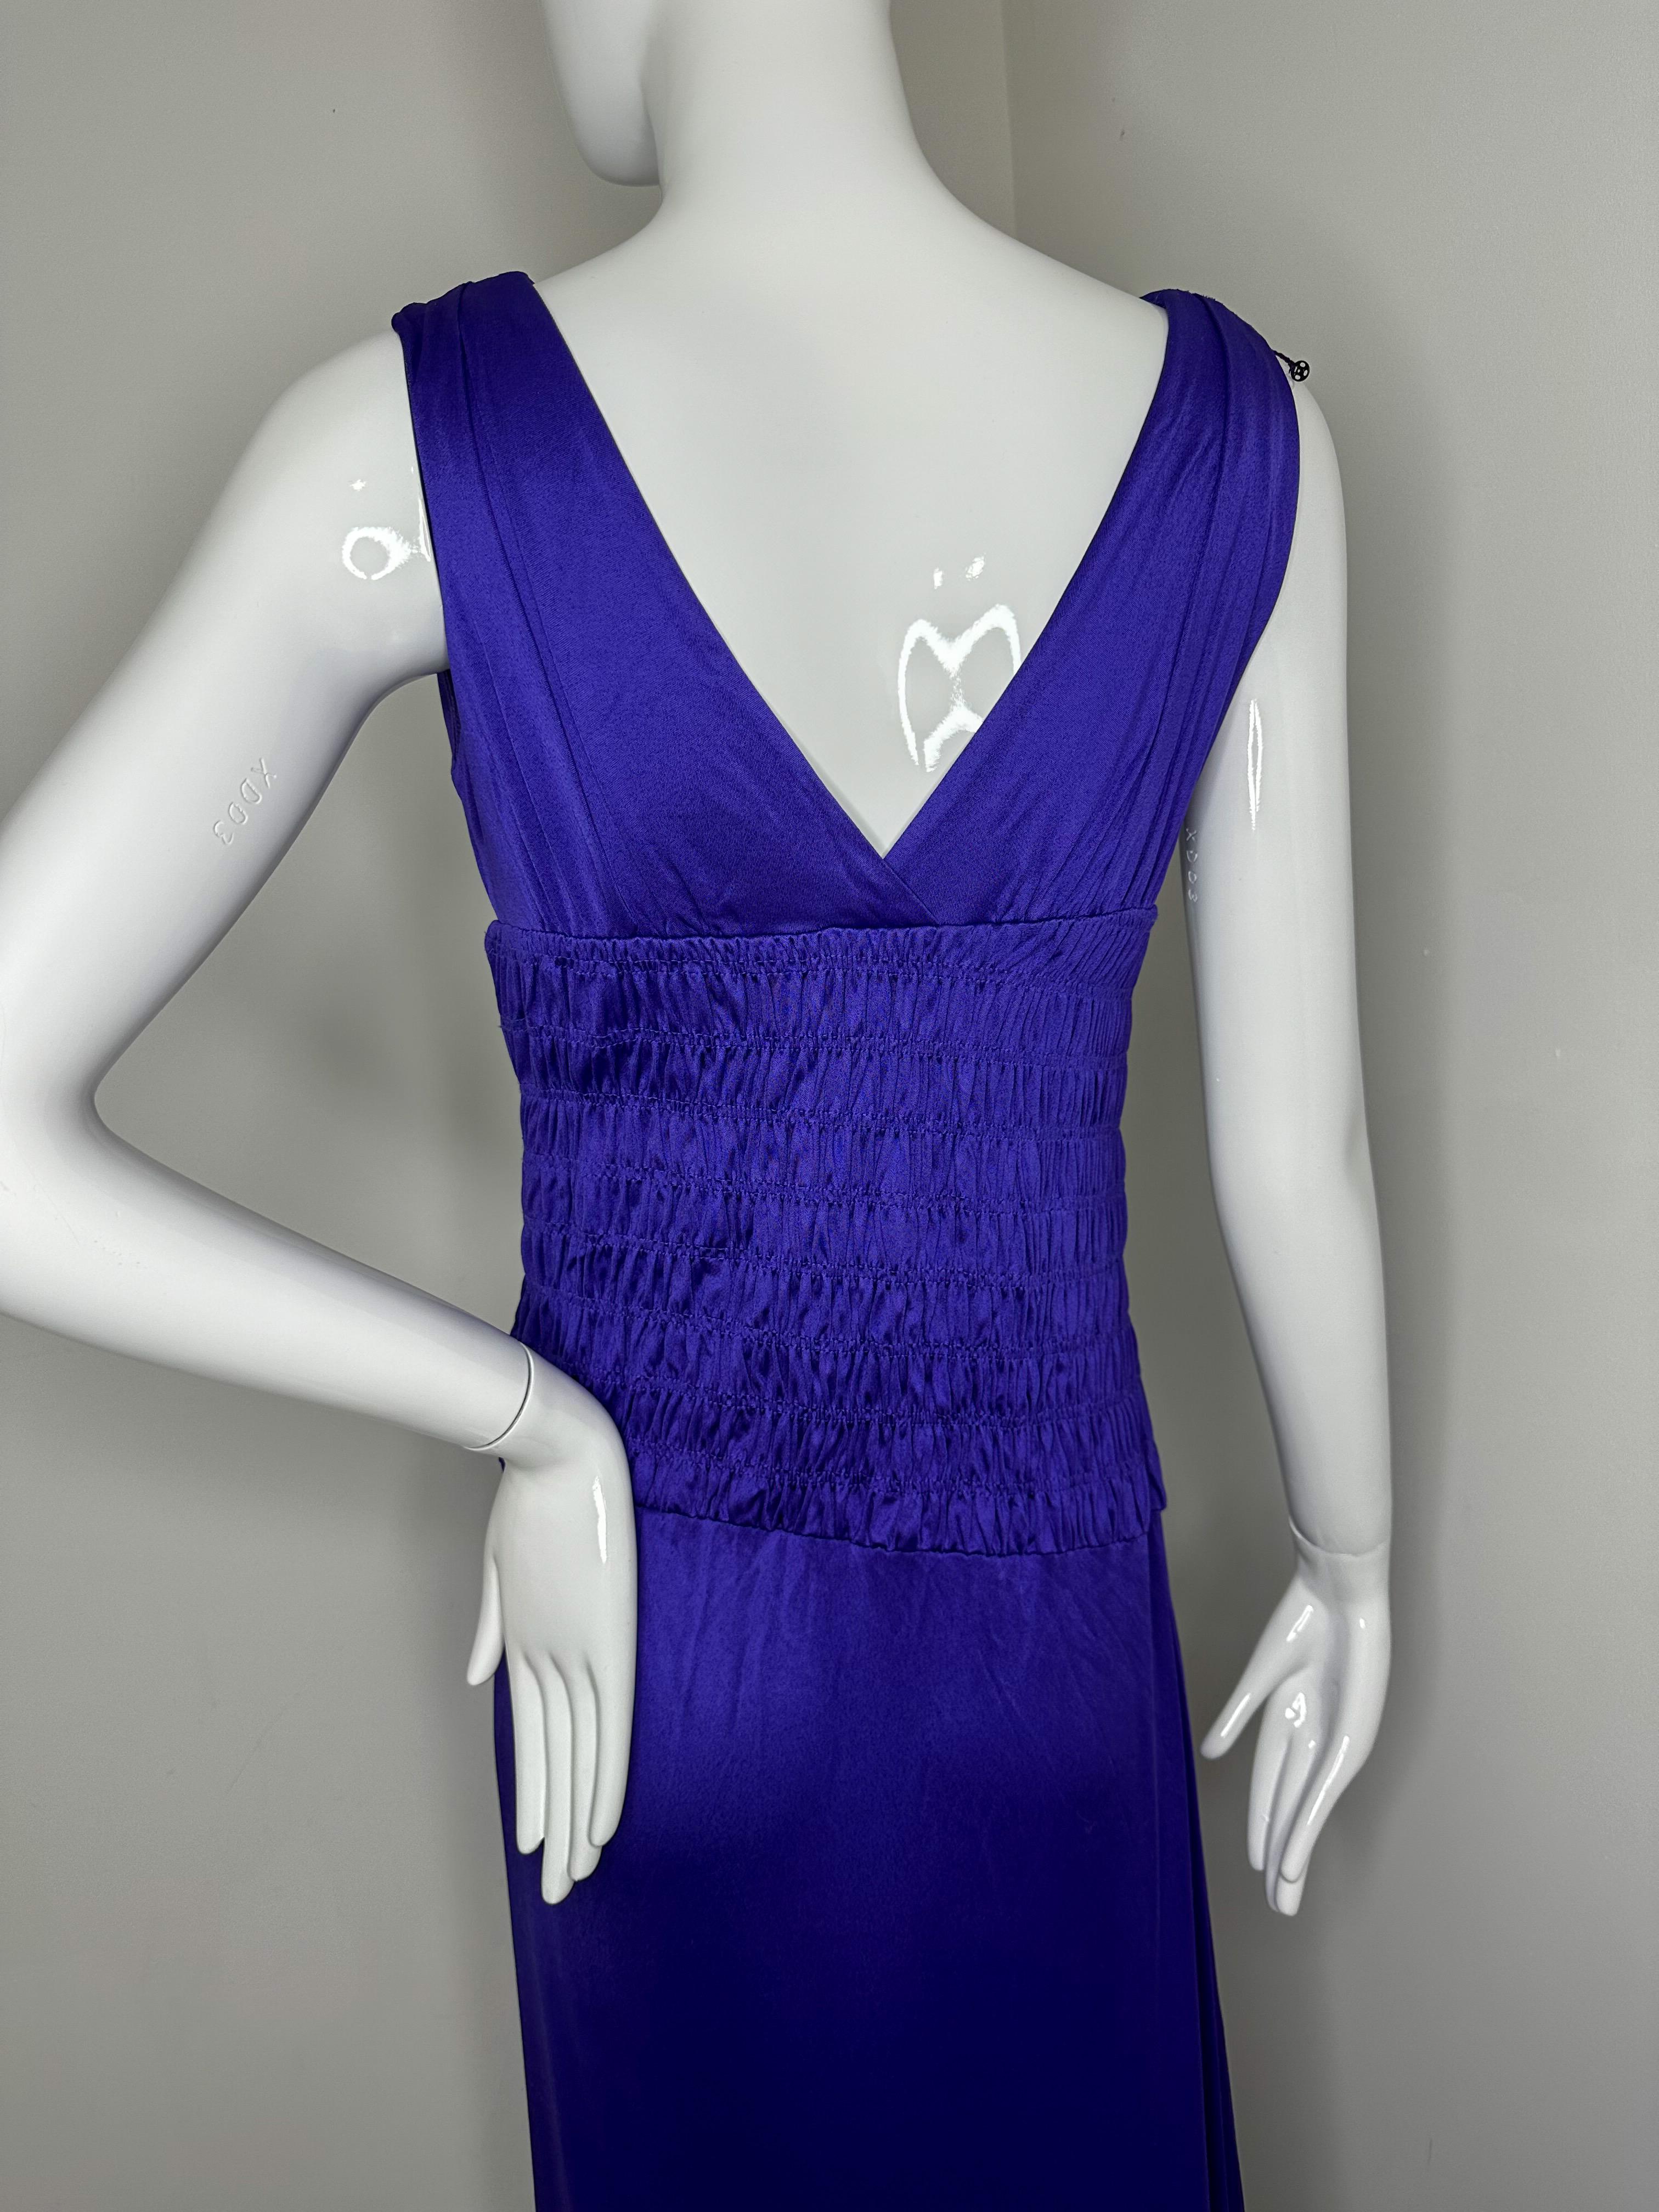 Women's Christian Dior by John Galliano 2009 purple maxi dress